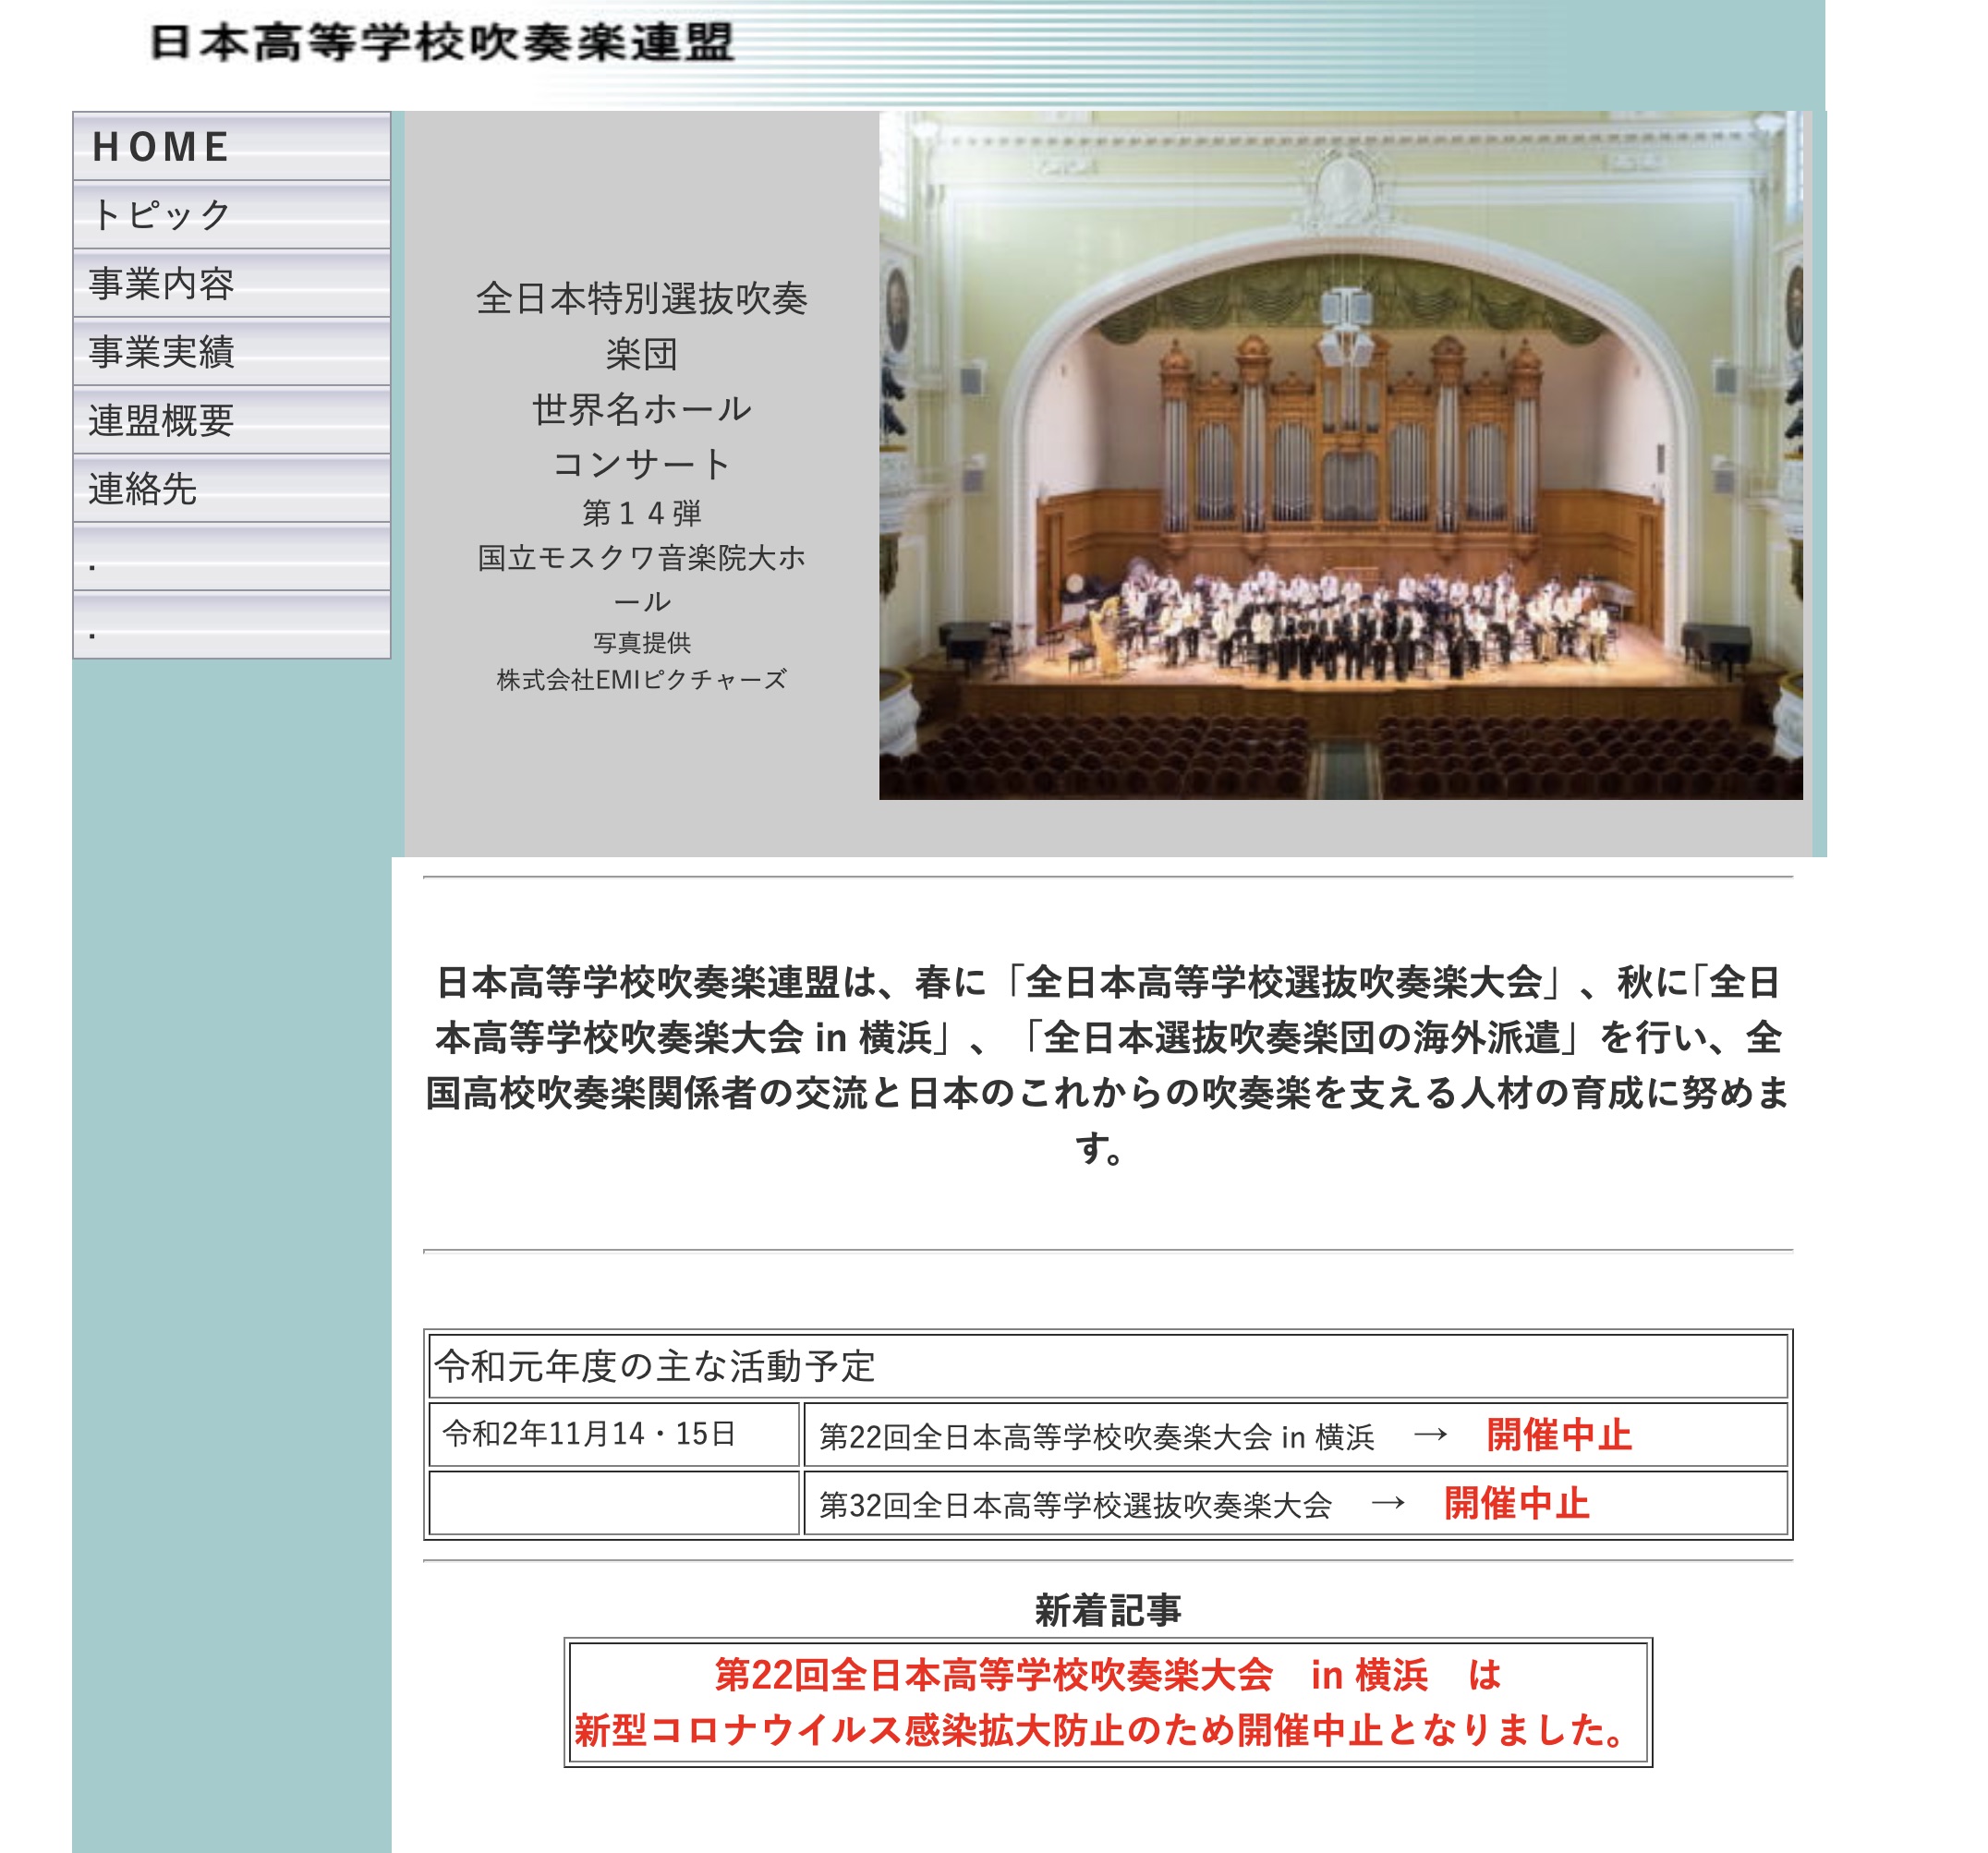 全日本高等学校吹奏楽大会 in 横浜の中止が決定 | ブラボー吹奏楽部